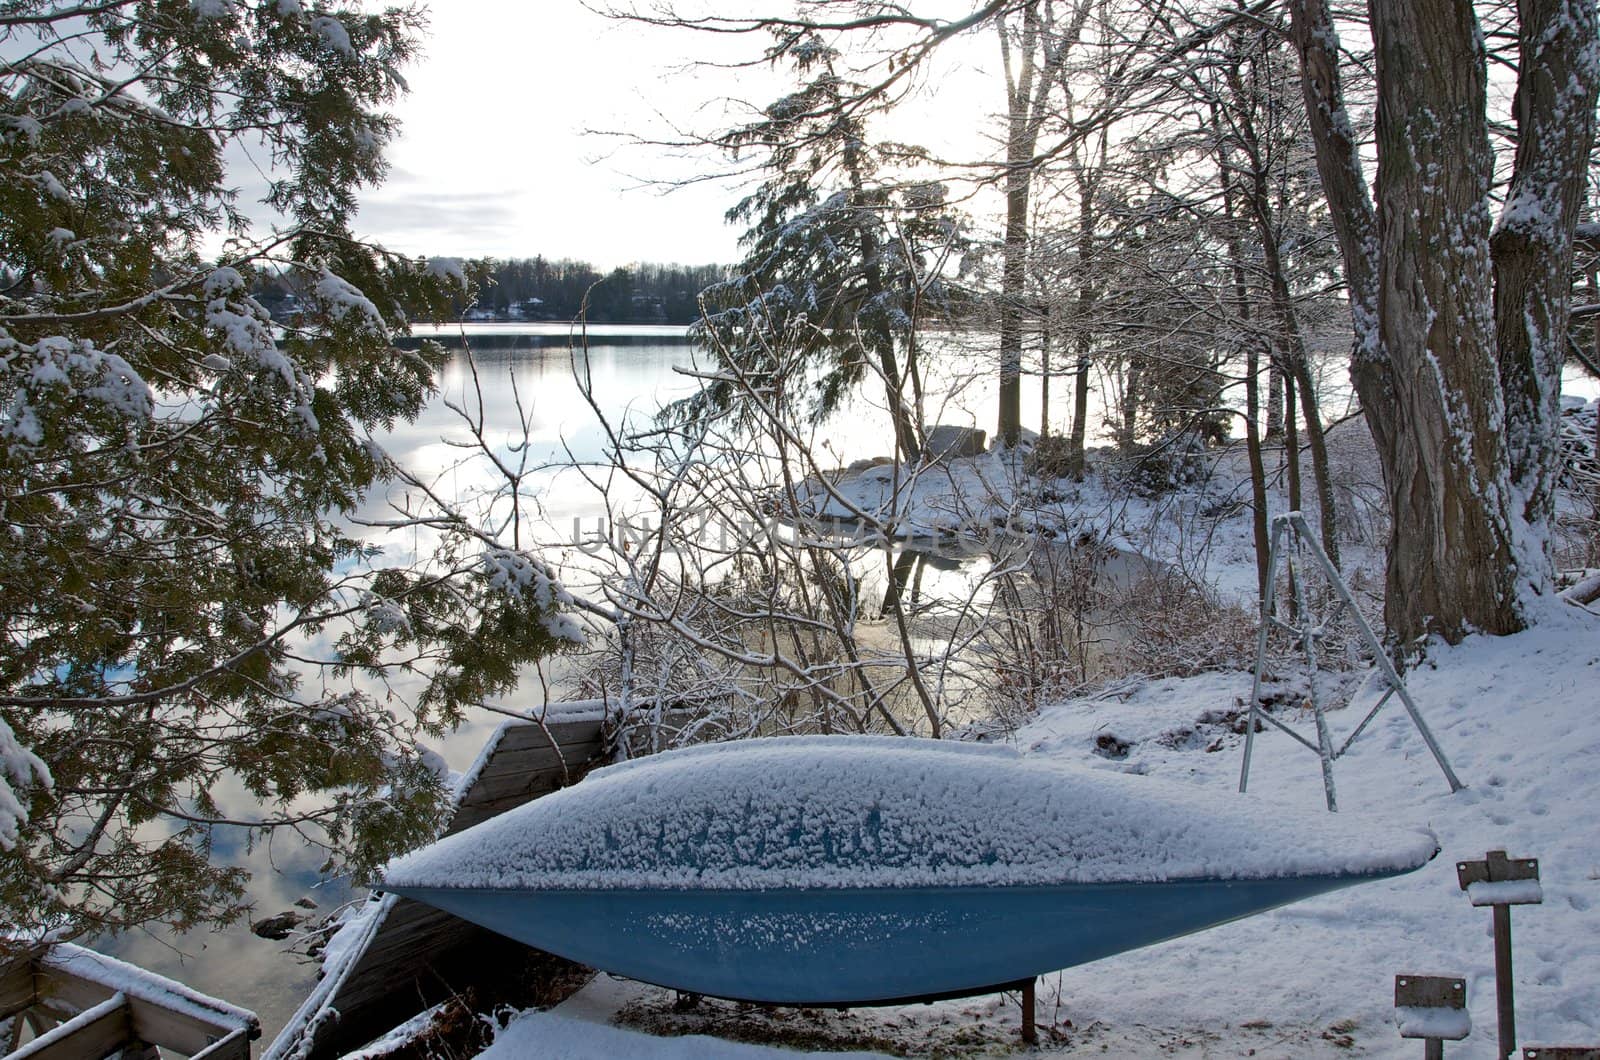 Canoe in winter by tyroneburkemedia@gmail.com